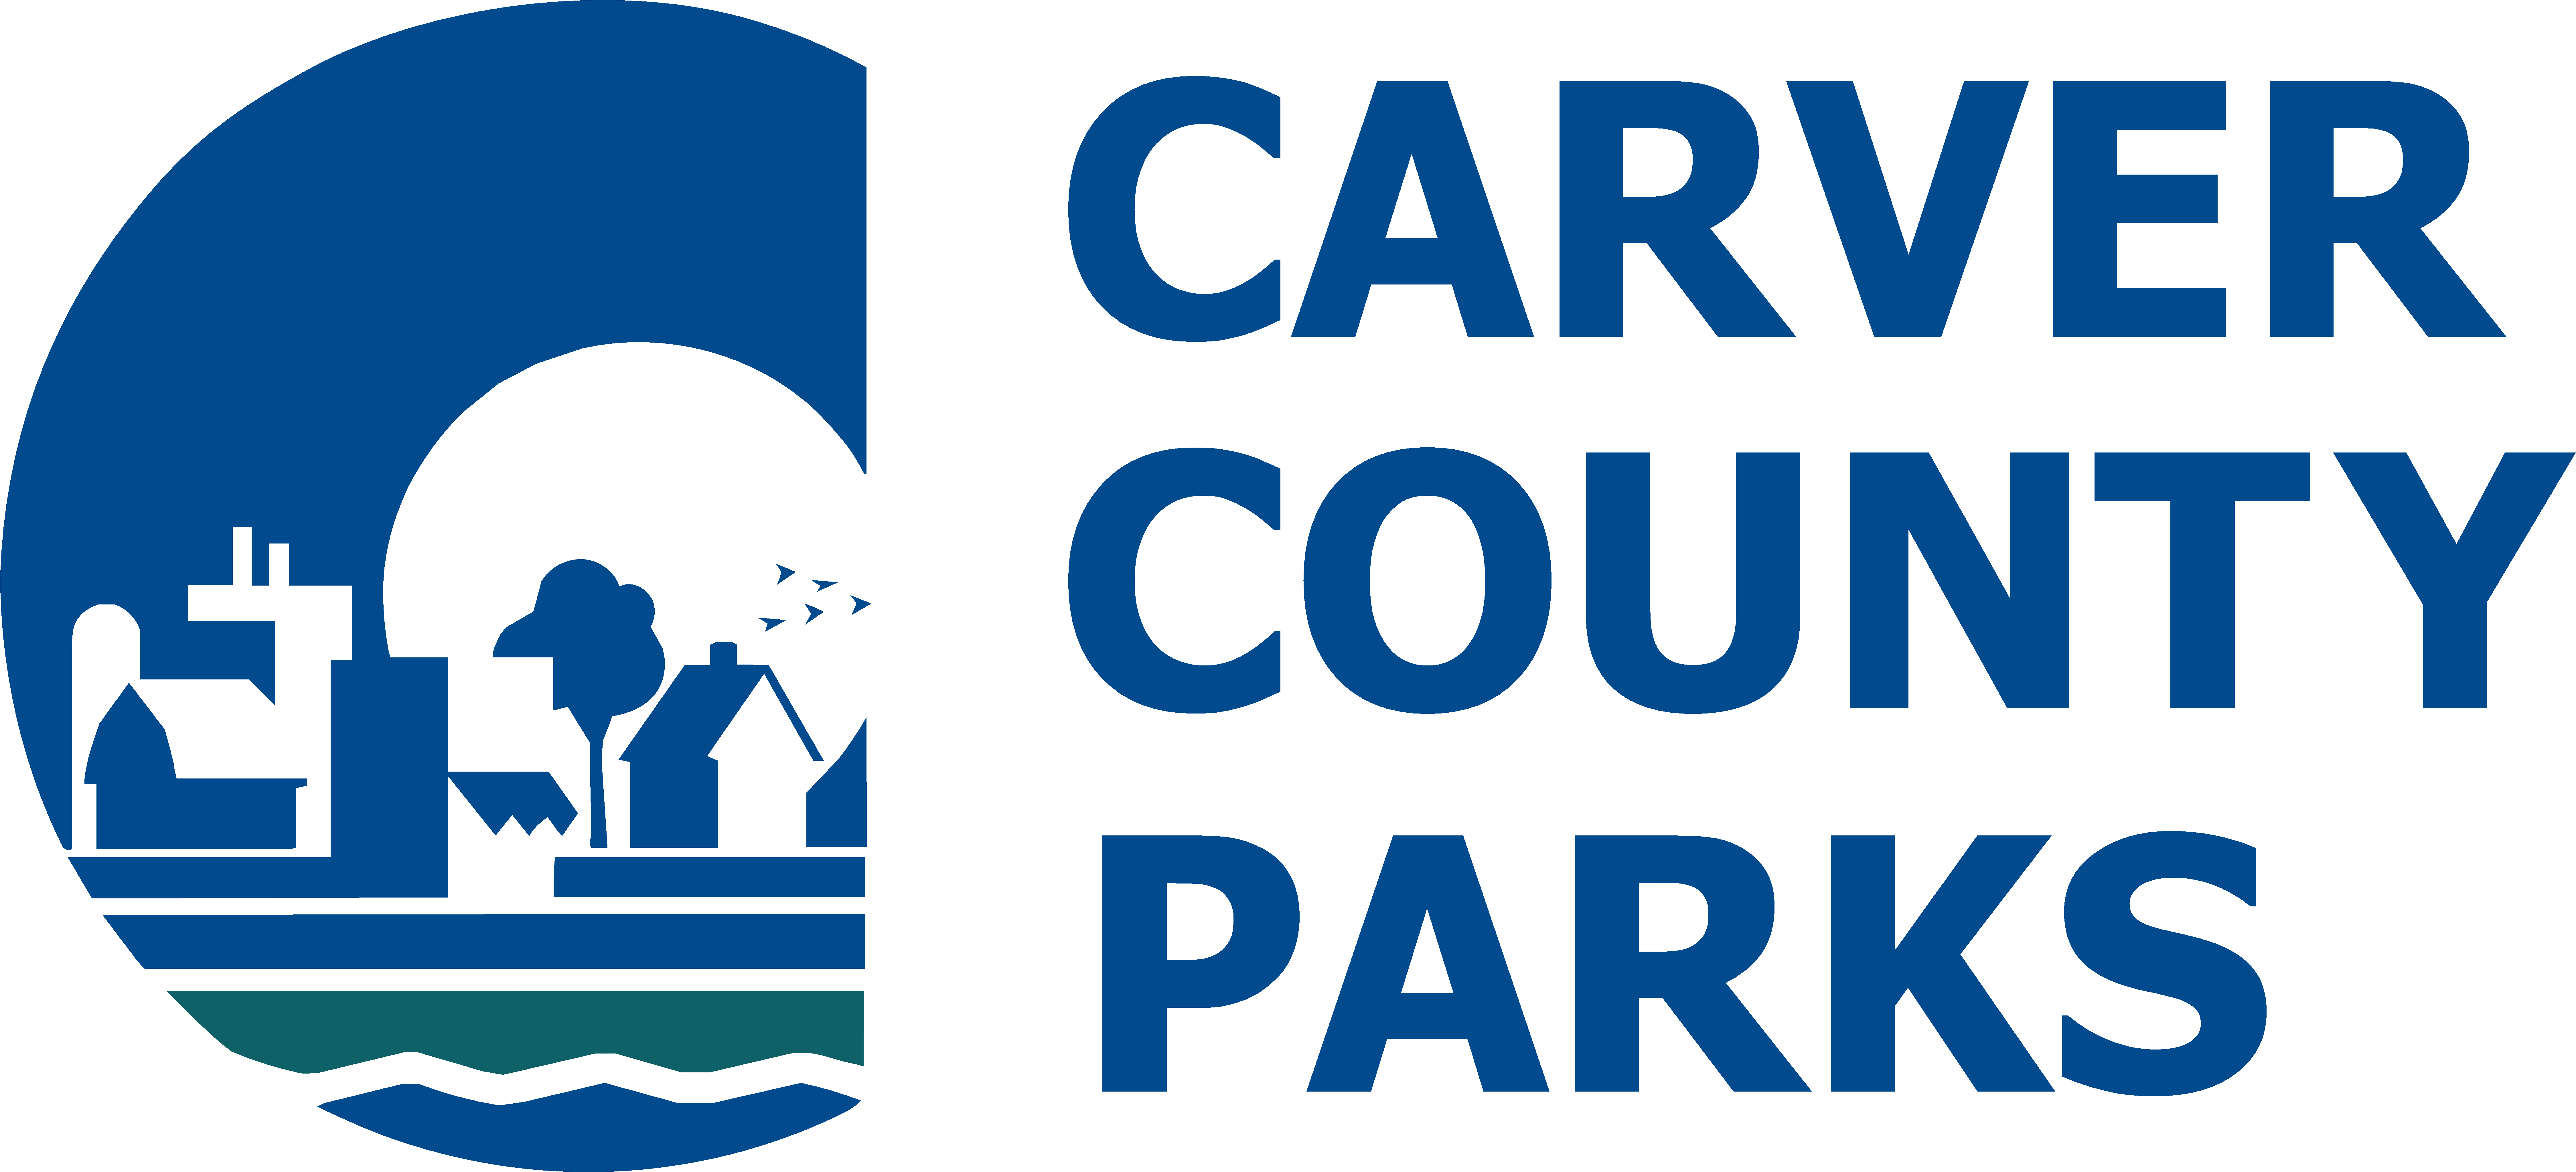 Okrug Carver Parks